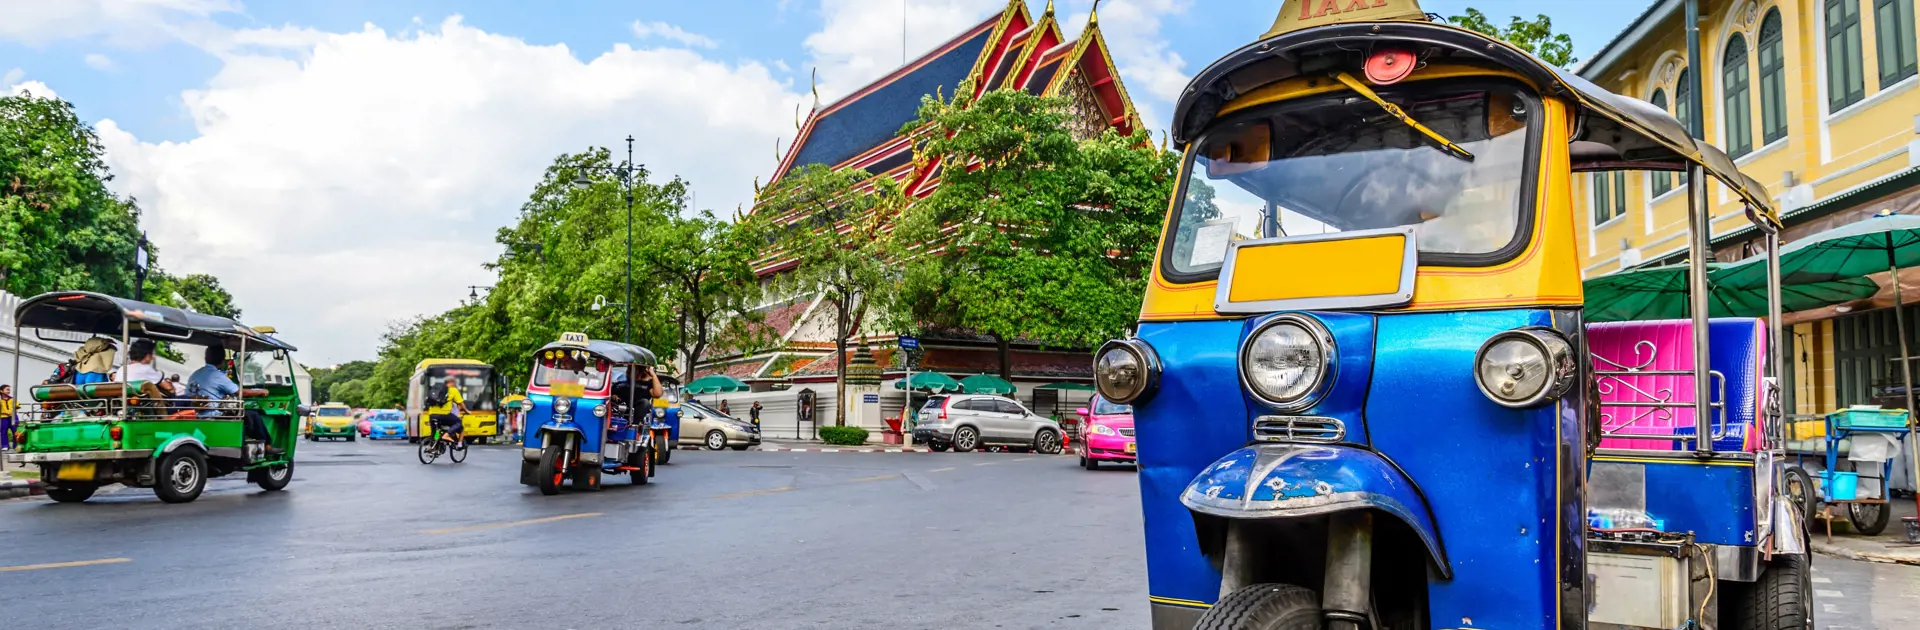 shutterstock_304651610 Blue Tuk Tuk, Thai traditional taxi in Bangkok Thailand..jpg